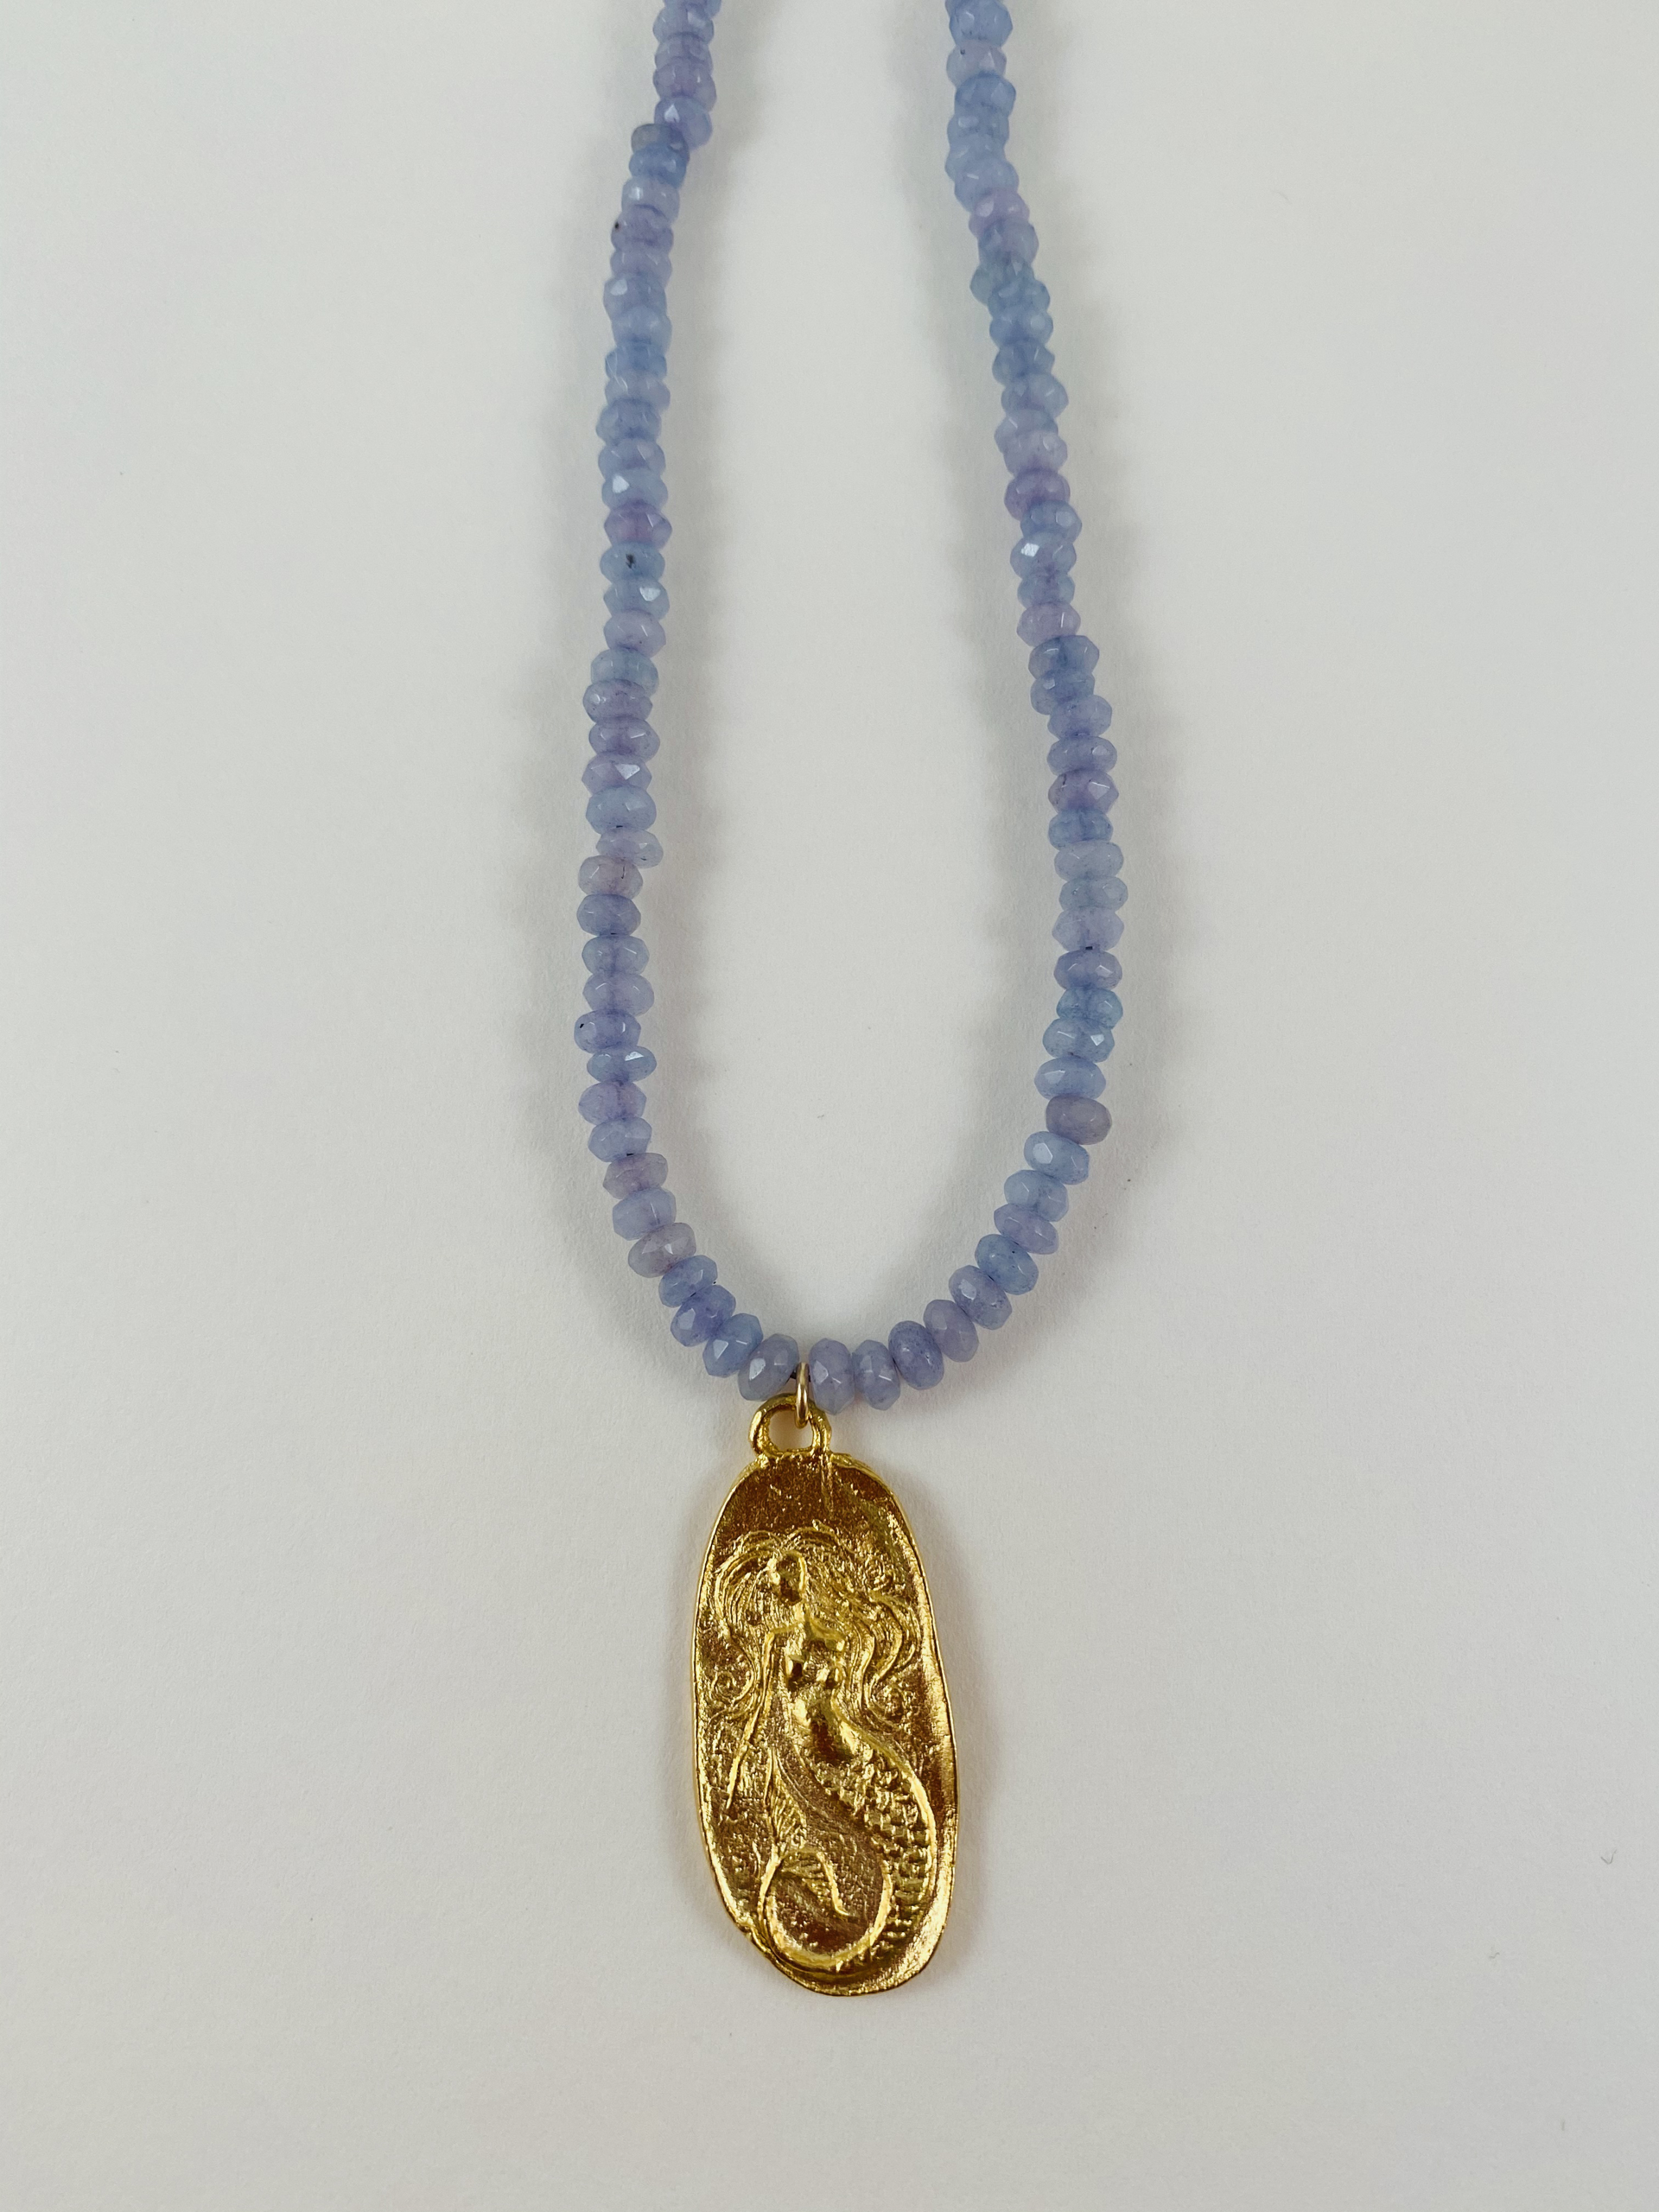 Chalcedony Necklace, mermaid pendant ( vermeil) by Nance Trueworthy